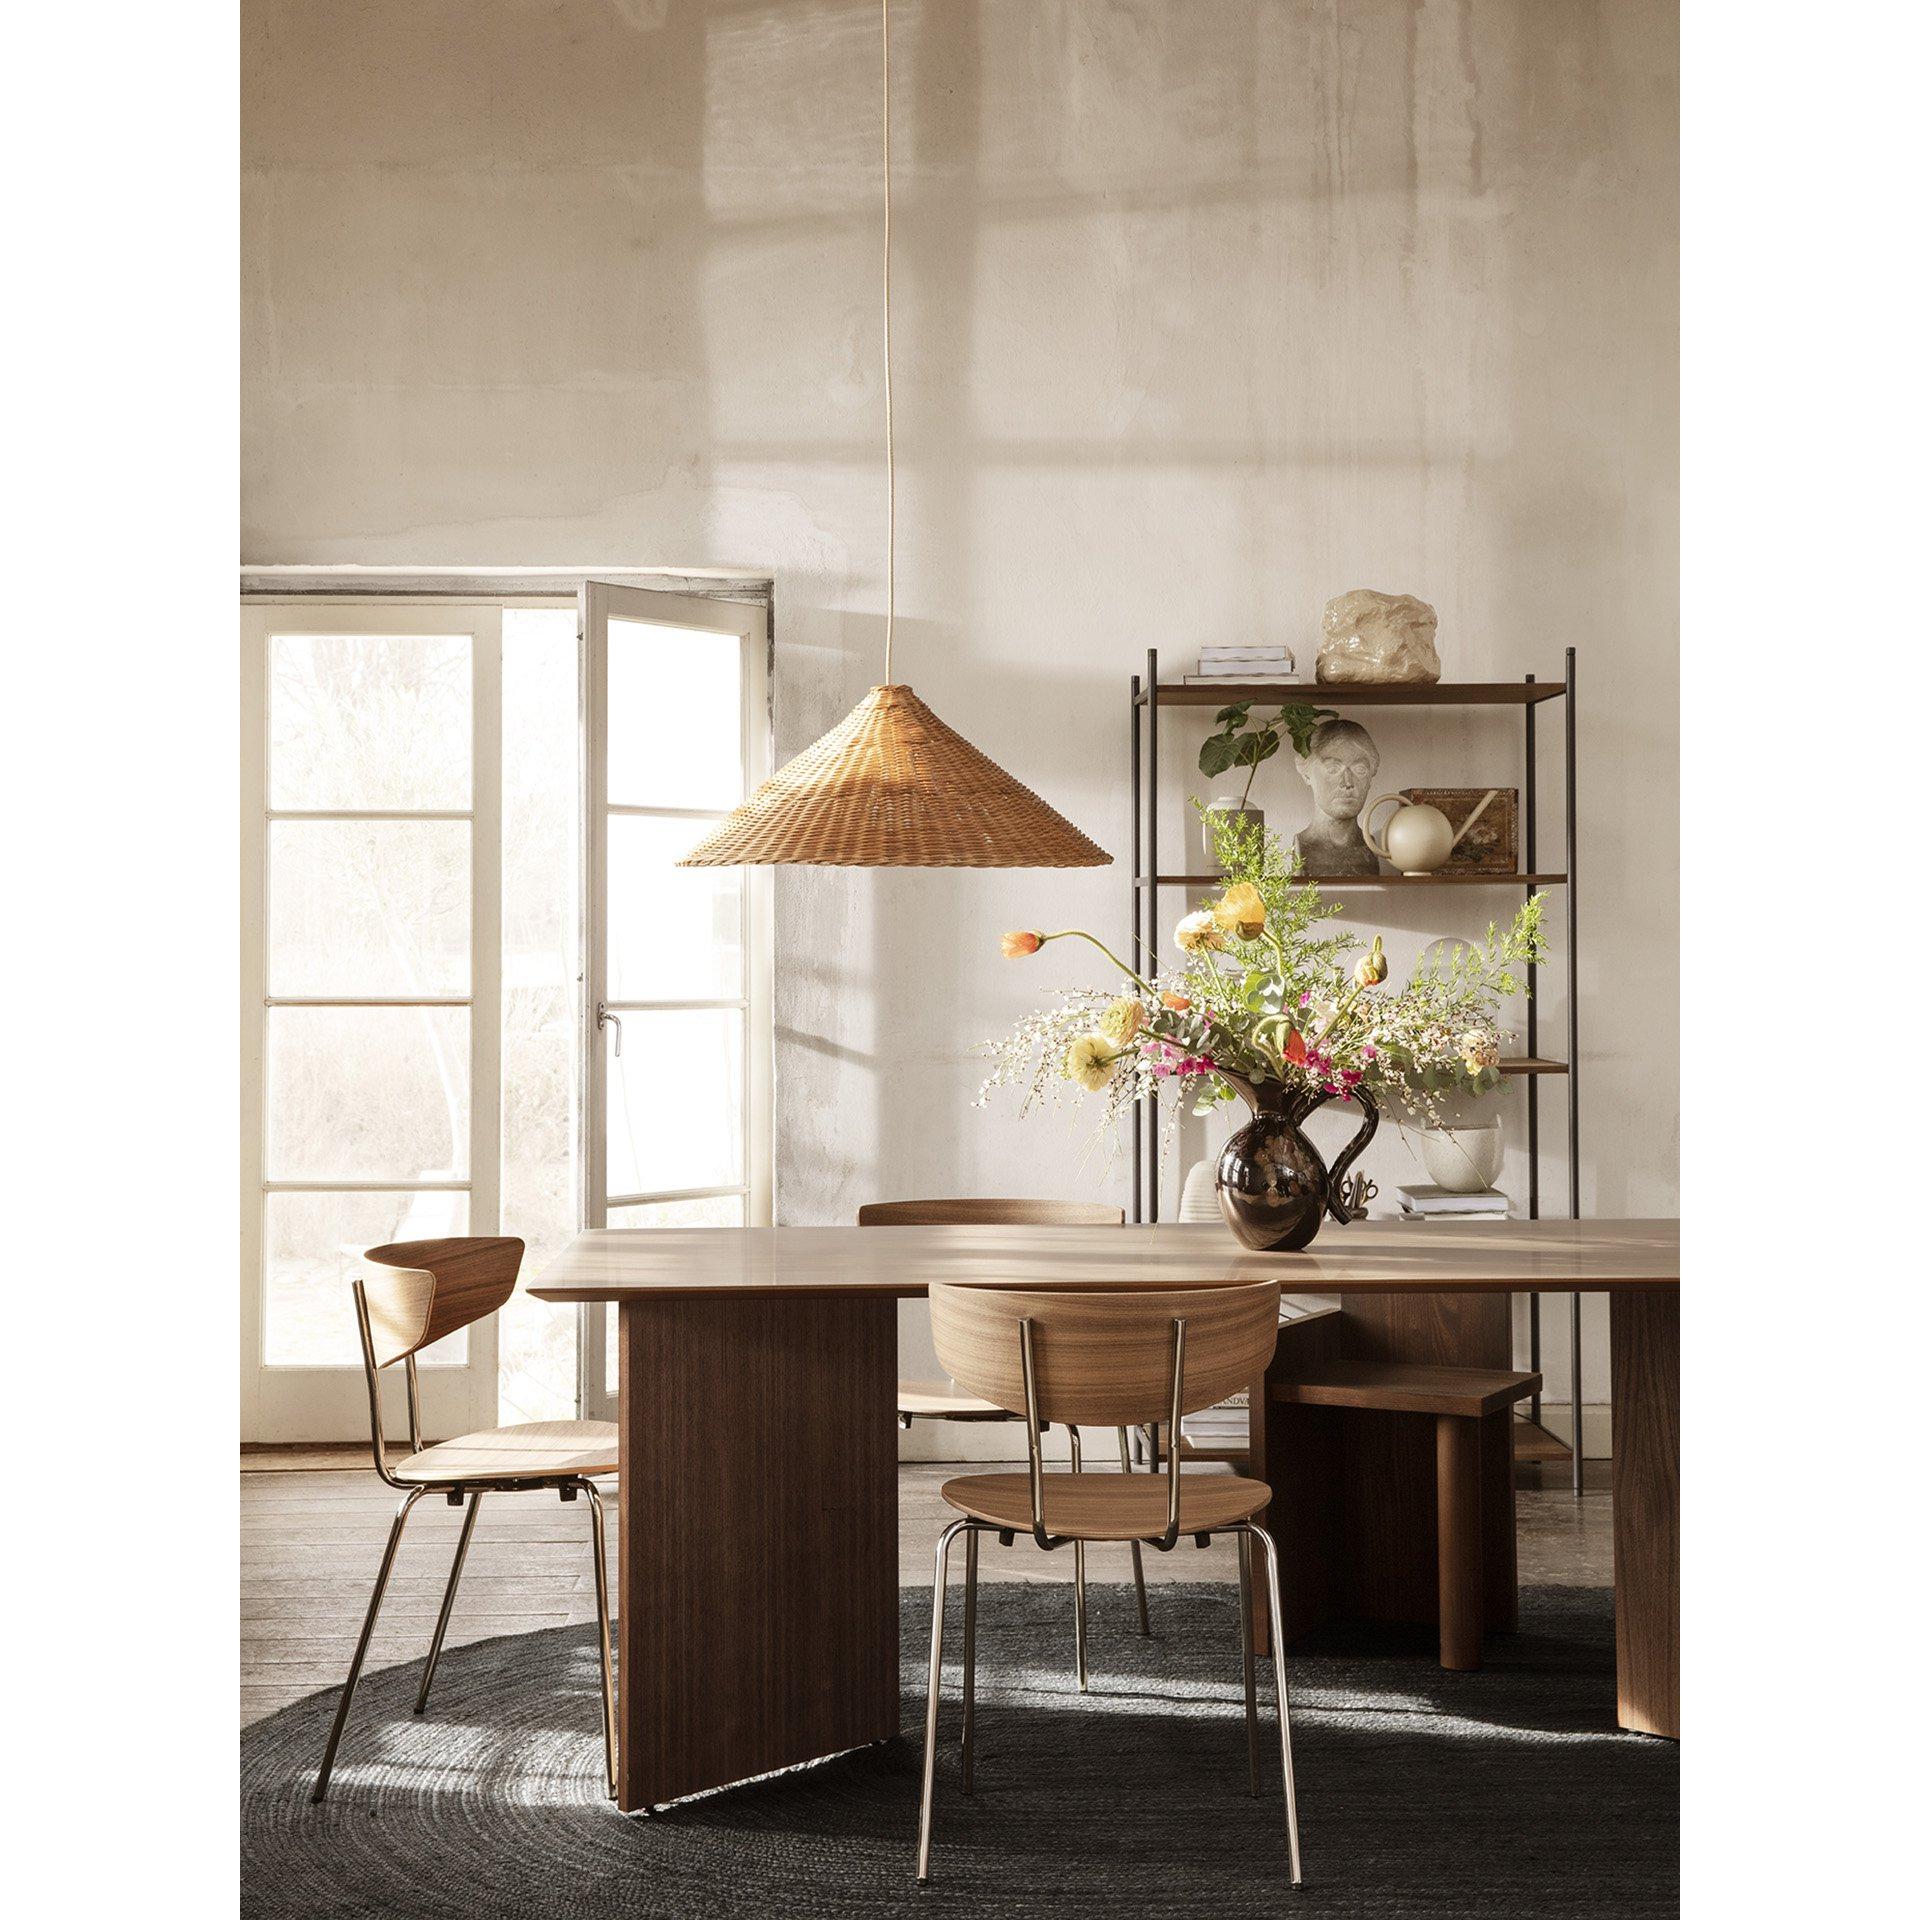 Ferm Living Mingle Tischplatte Nussbaum, 160 Cm